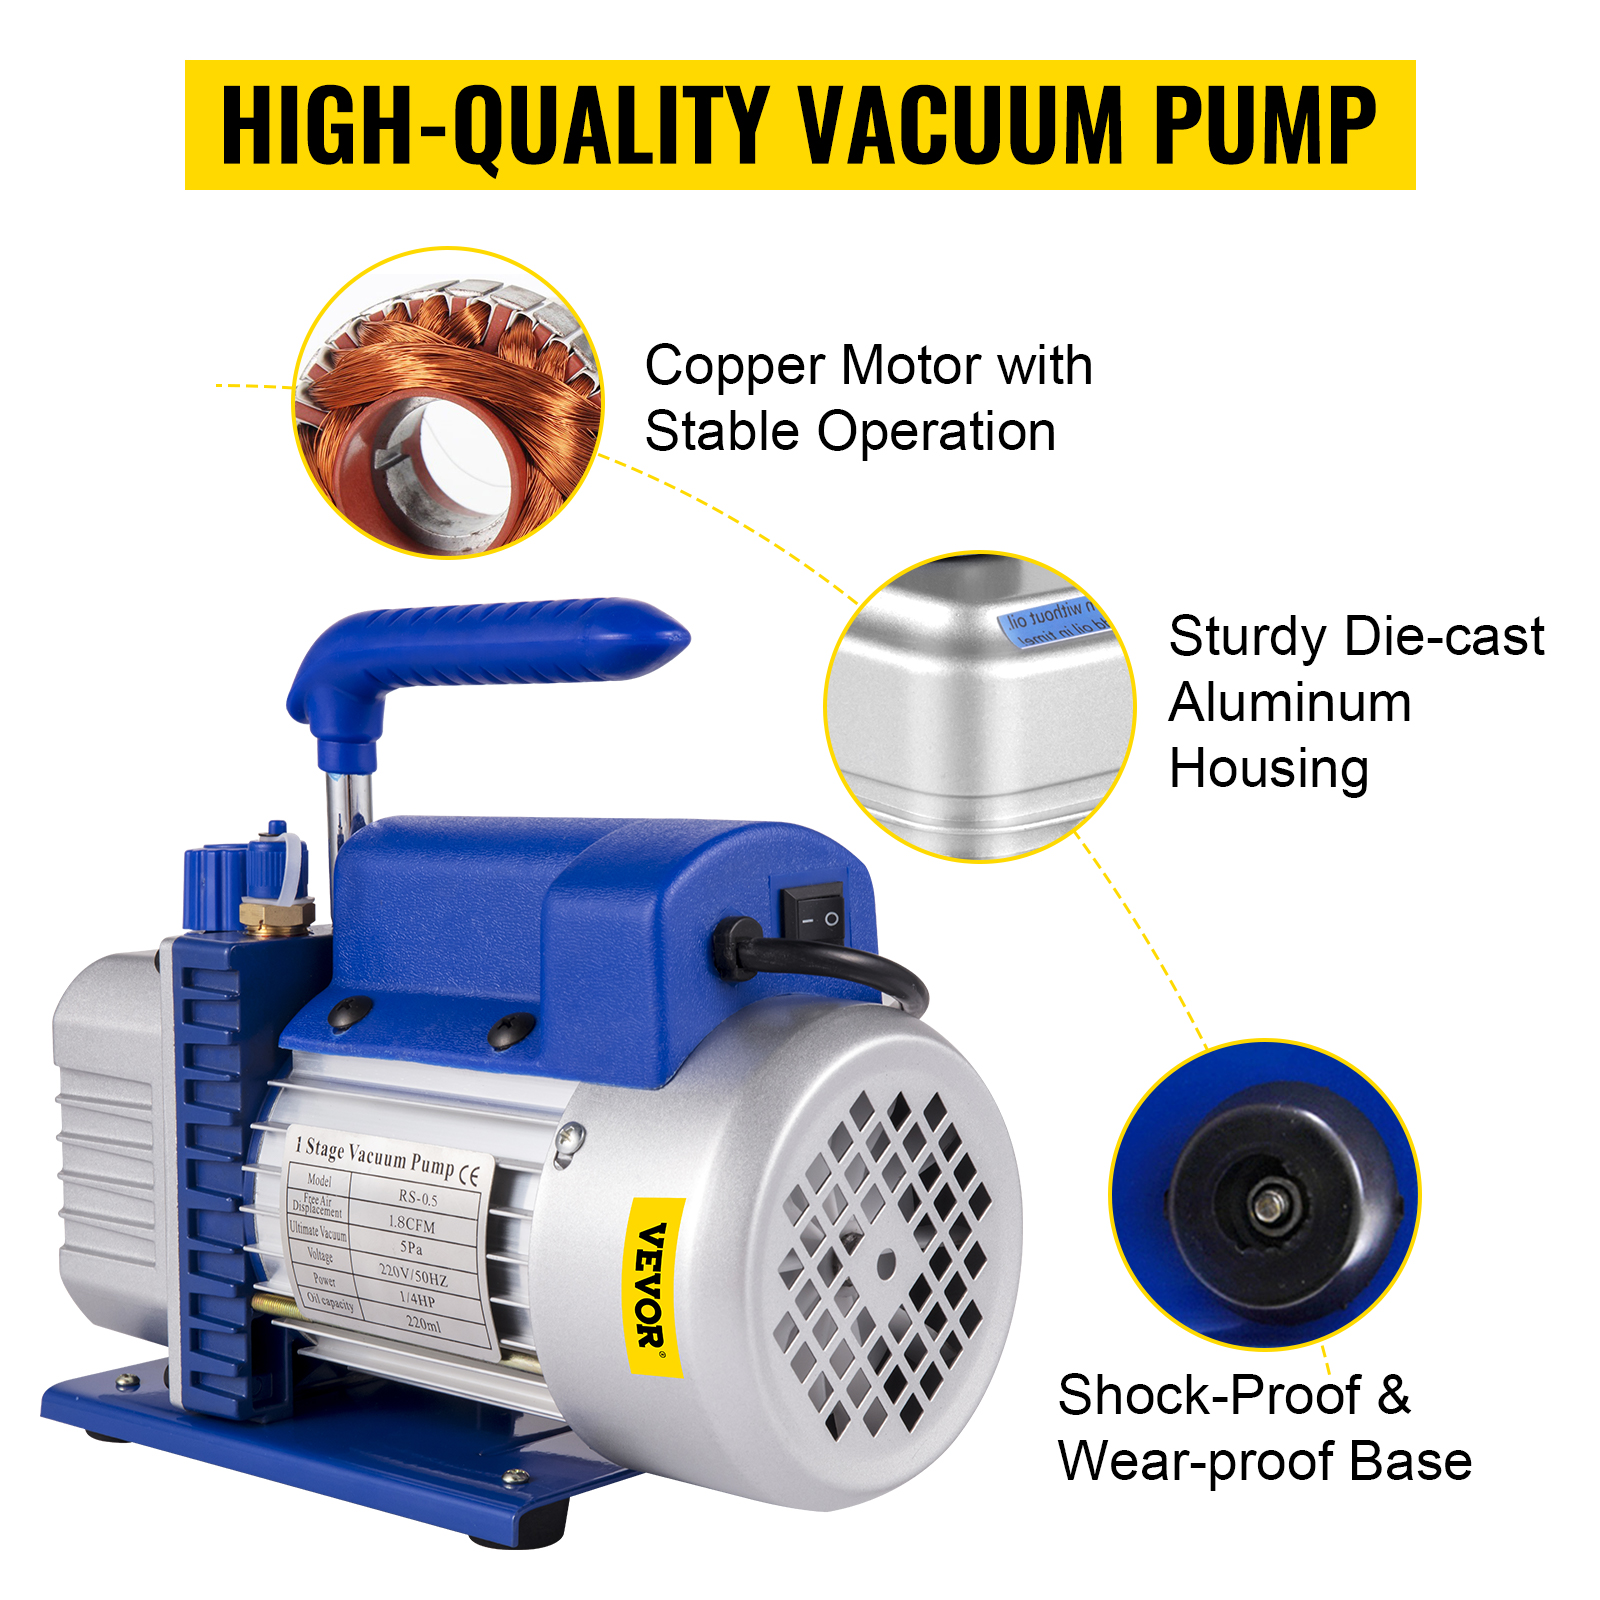 VEVOR Refrigerant Vacuum Pump Kits 1.8-4.8CFM HVAC Refrigeration 1/3 1/4 HP  with Manifold Gauge for Household Air Conditioning